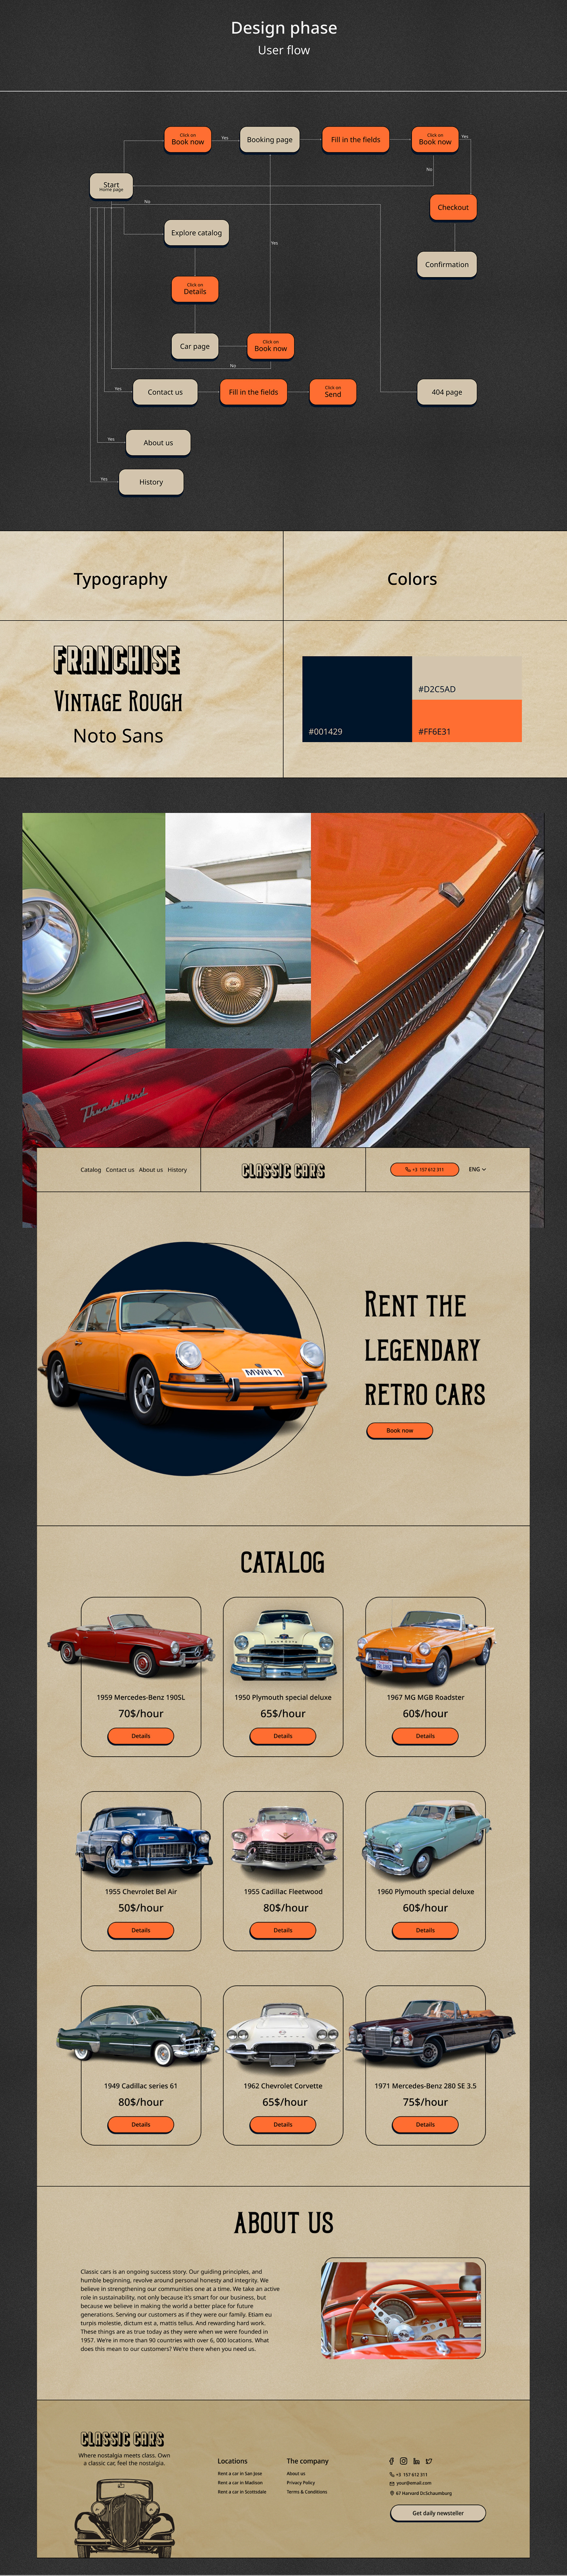 Cars Classic Classic Cars rent a car rental Retro Retro Cars UX UI vintage Web Design 